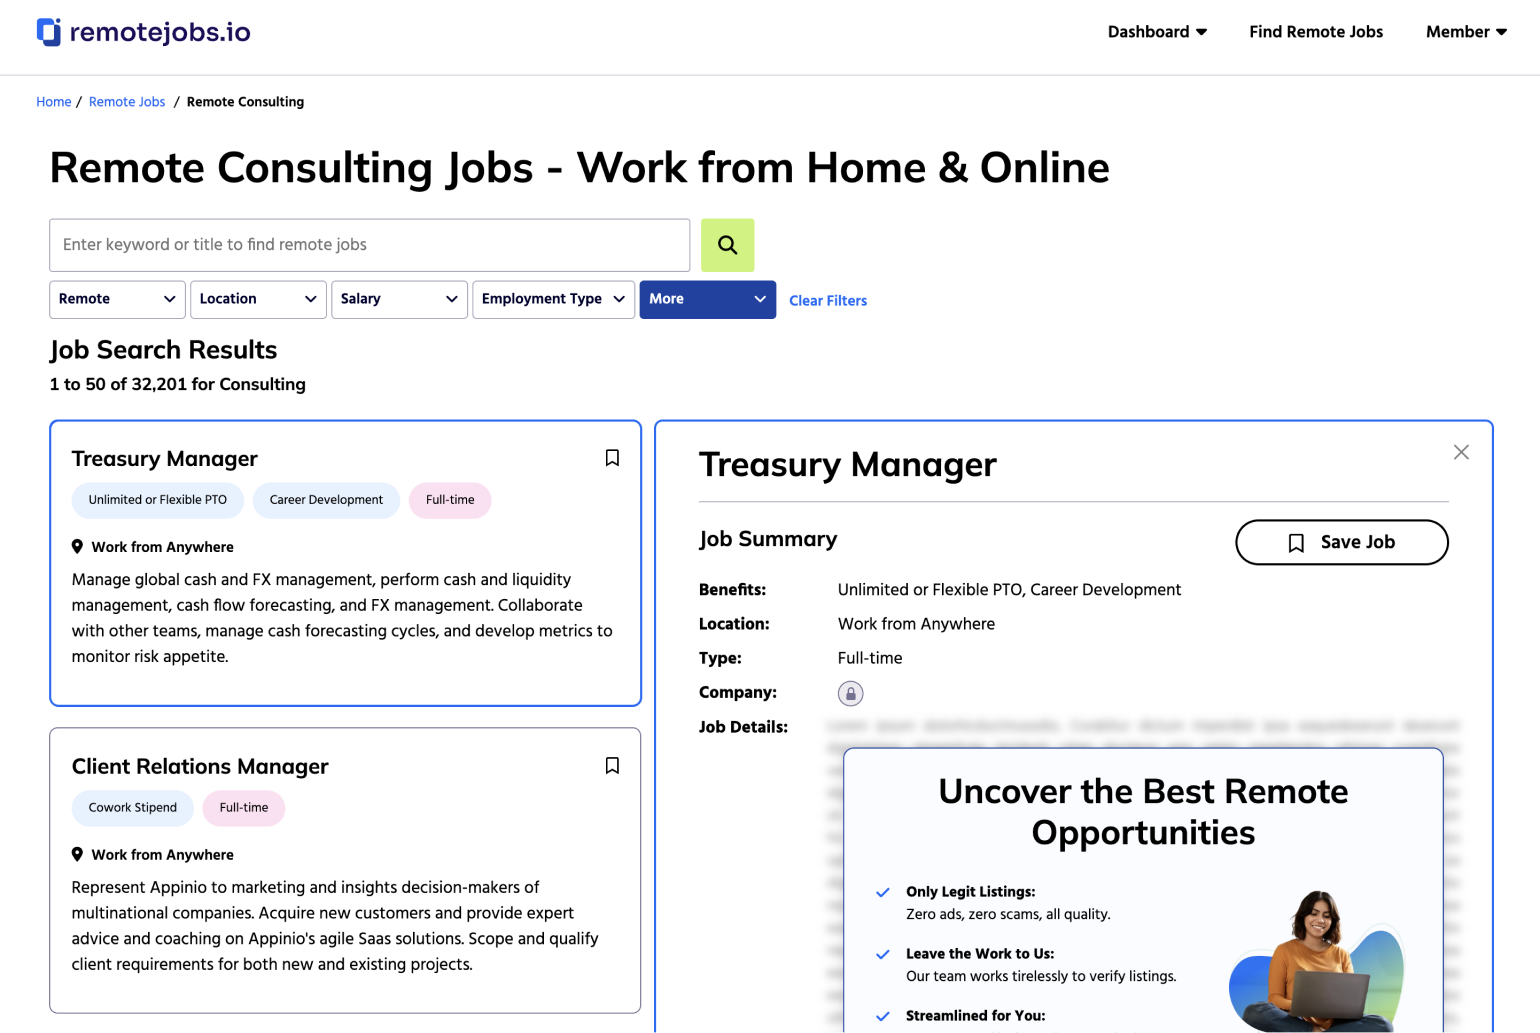 Remote.Jobs.io's job search platform showing three remote consulting job listings.